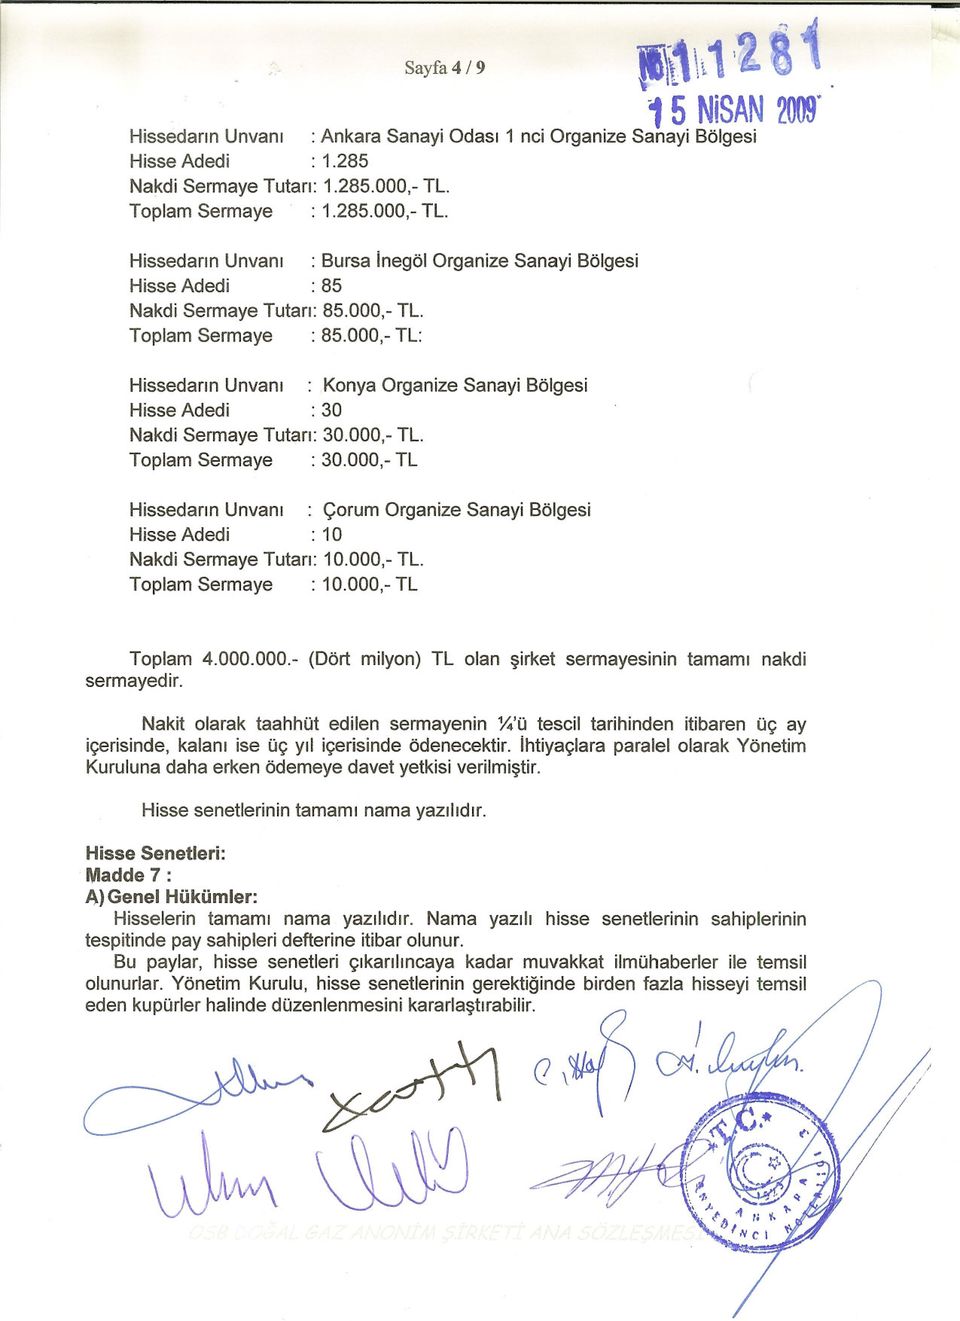 000,- TL: Hissedarin Unvani : Konya Organize Sanayi Bölgesi Hisse Adedi : 30 Nakdi Sermaye Tutari: 30.000,- TL. Toplam Sermaye : 30.